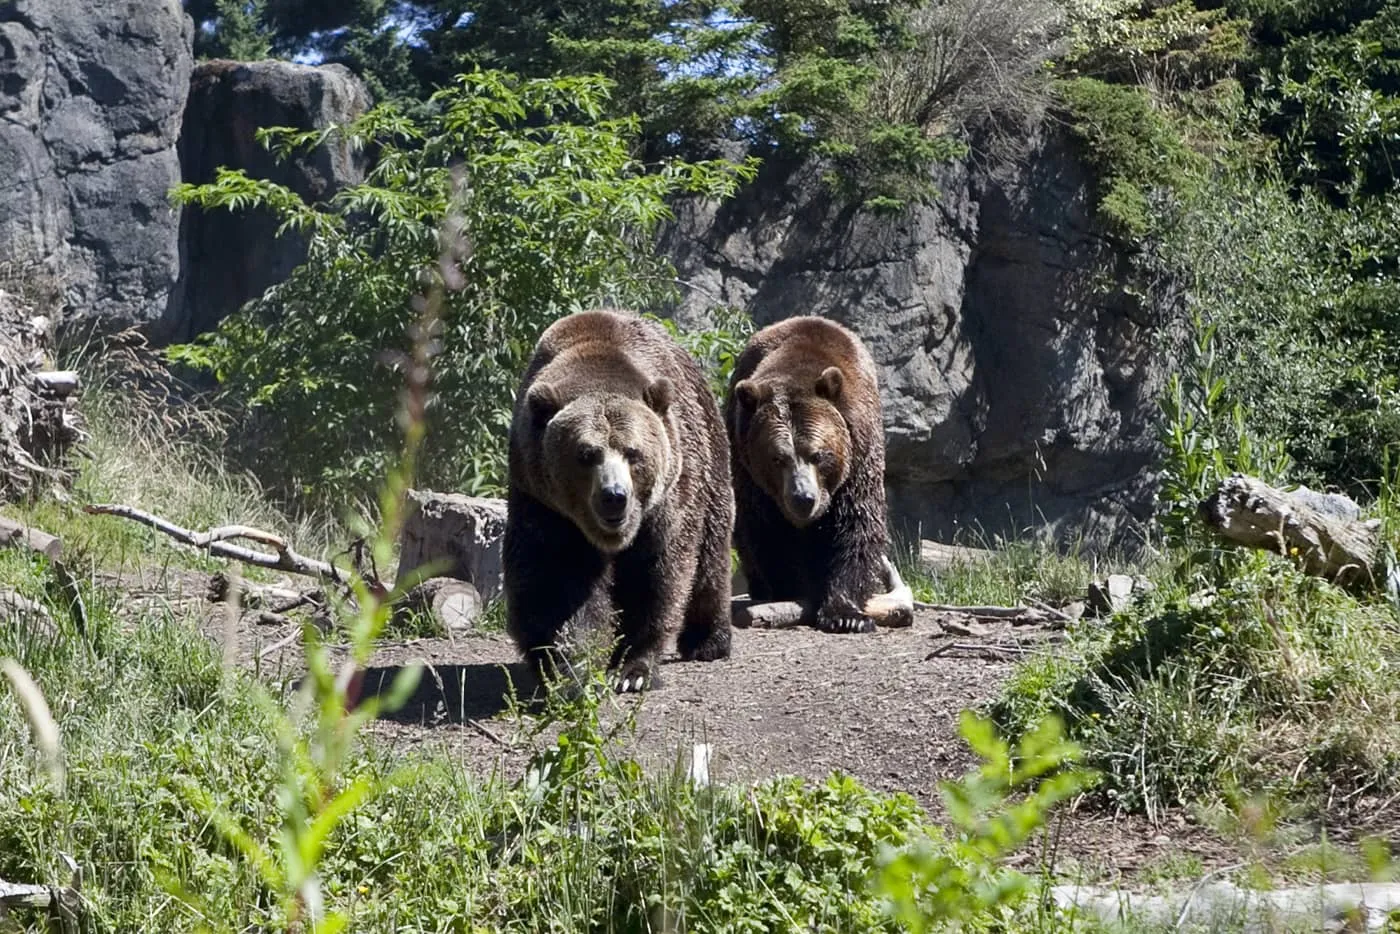 Bears at Woodland Park Zoo in Seattle, Washington.